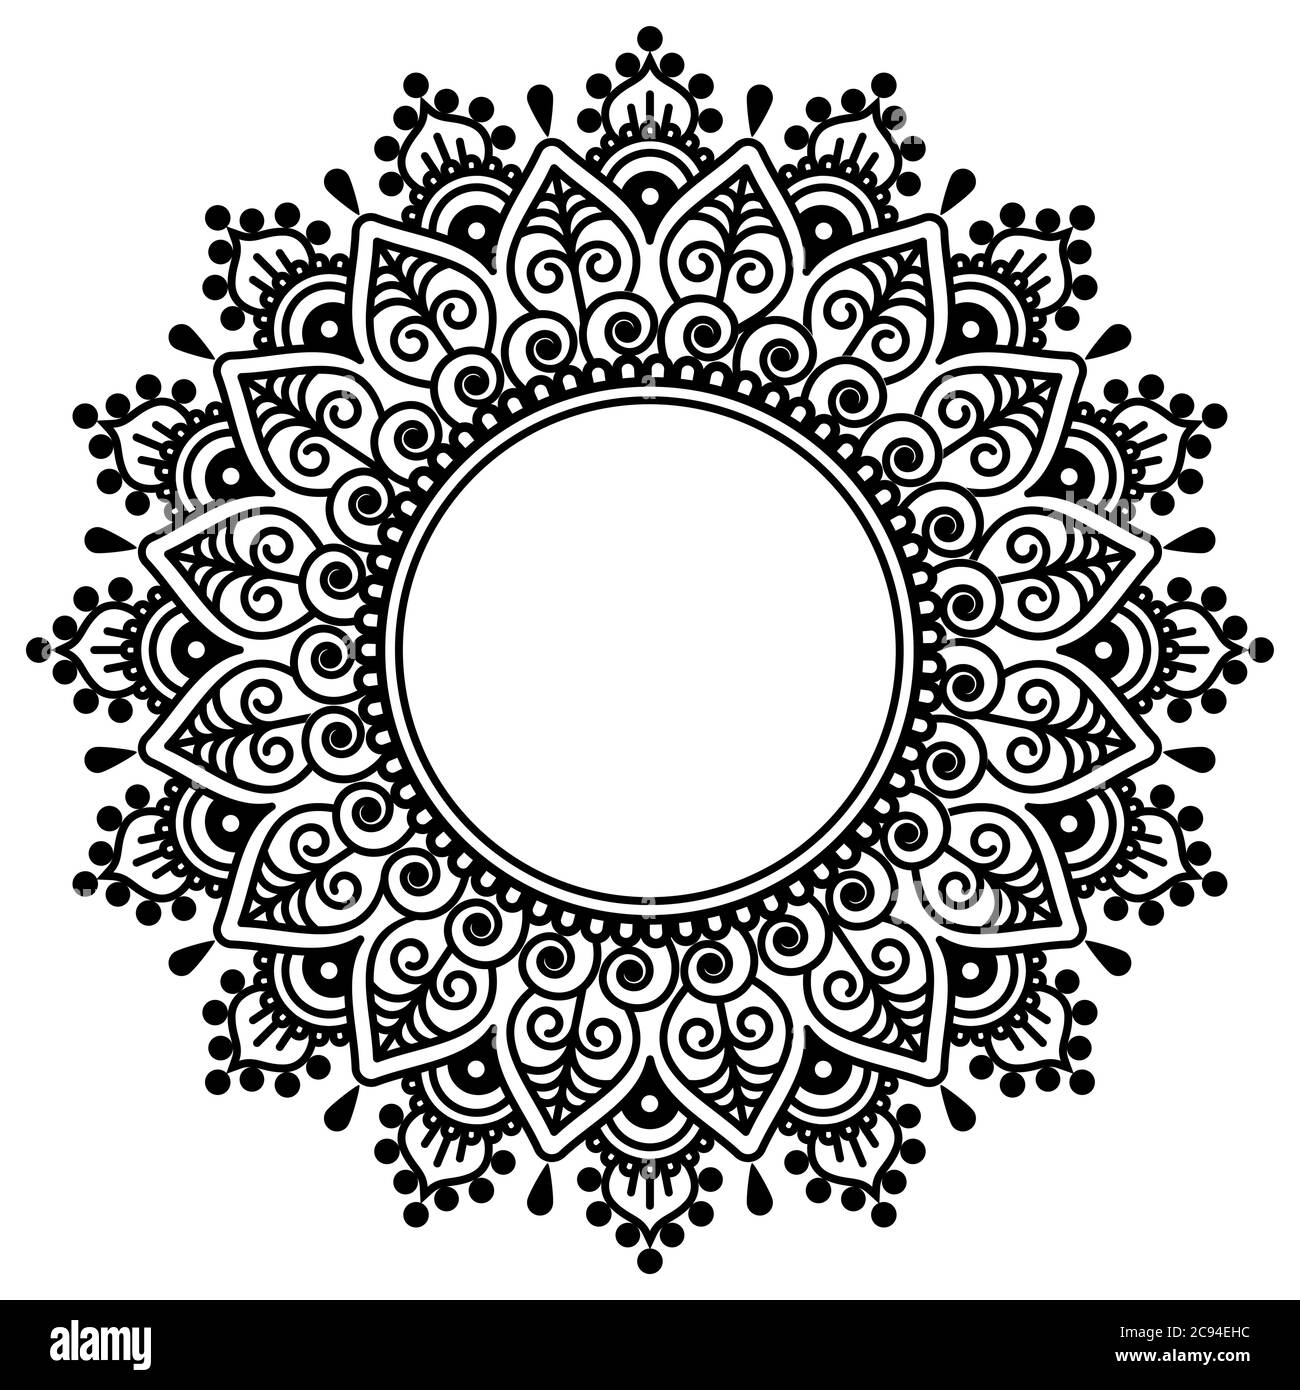 Mehndi Indian henna tatoo vector mandala design - traditional geometric pattern popular in India and Pakistan Stock Vector